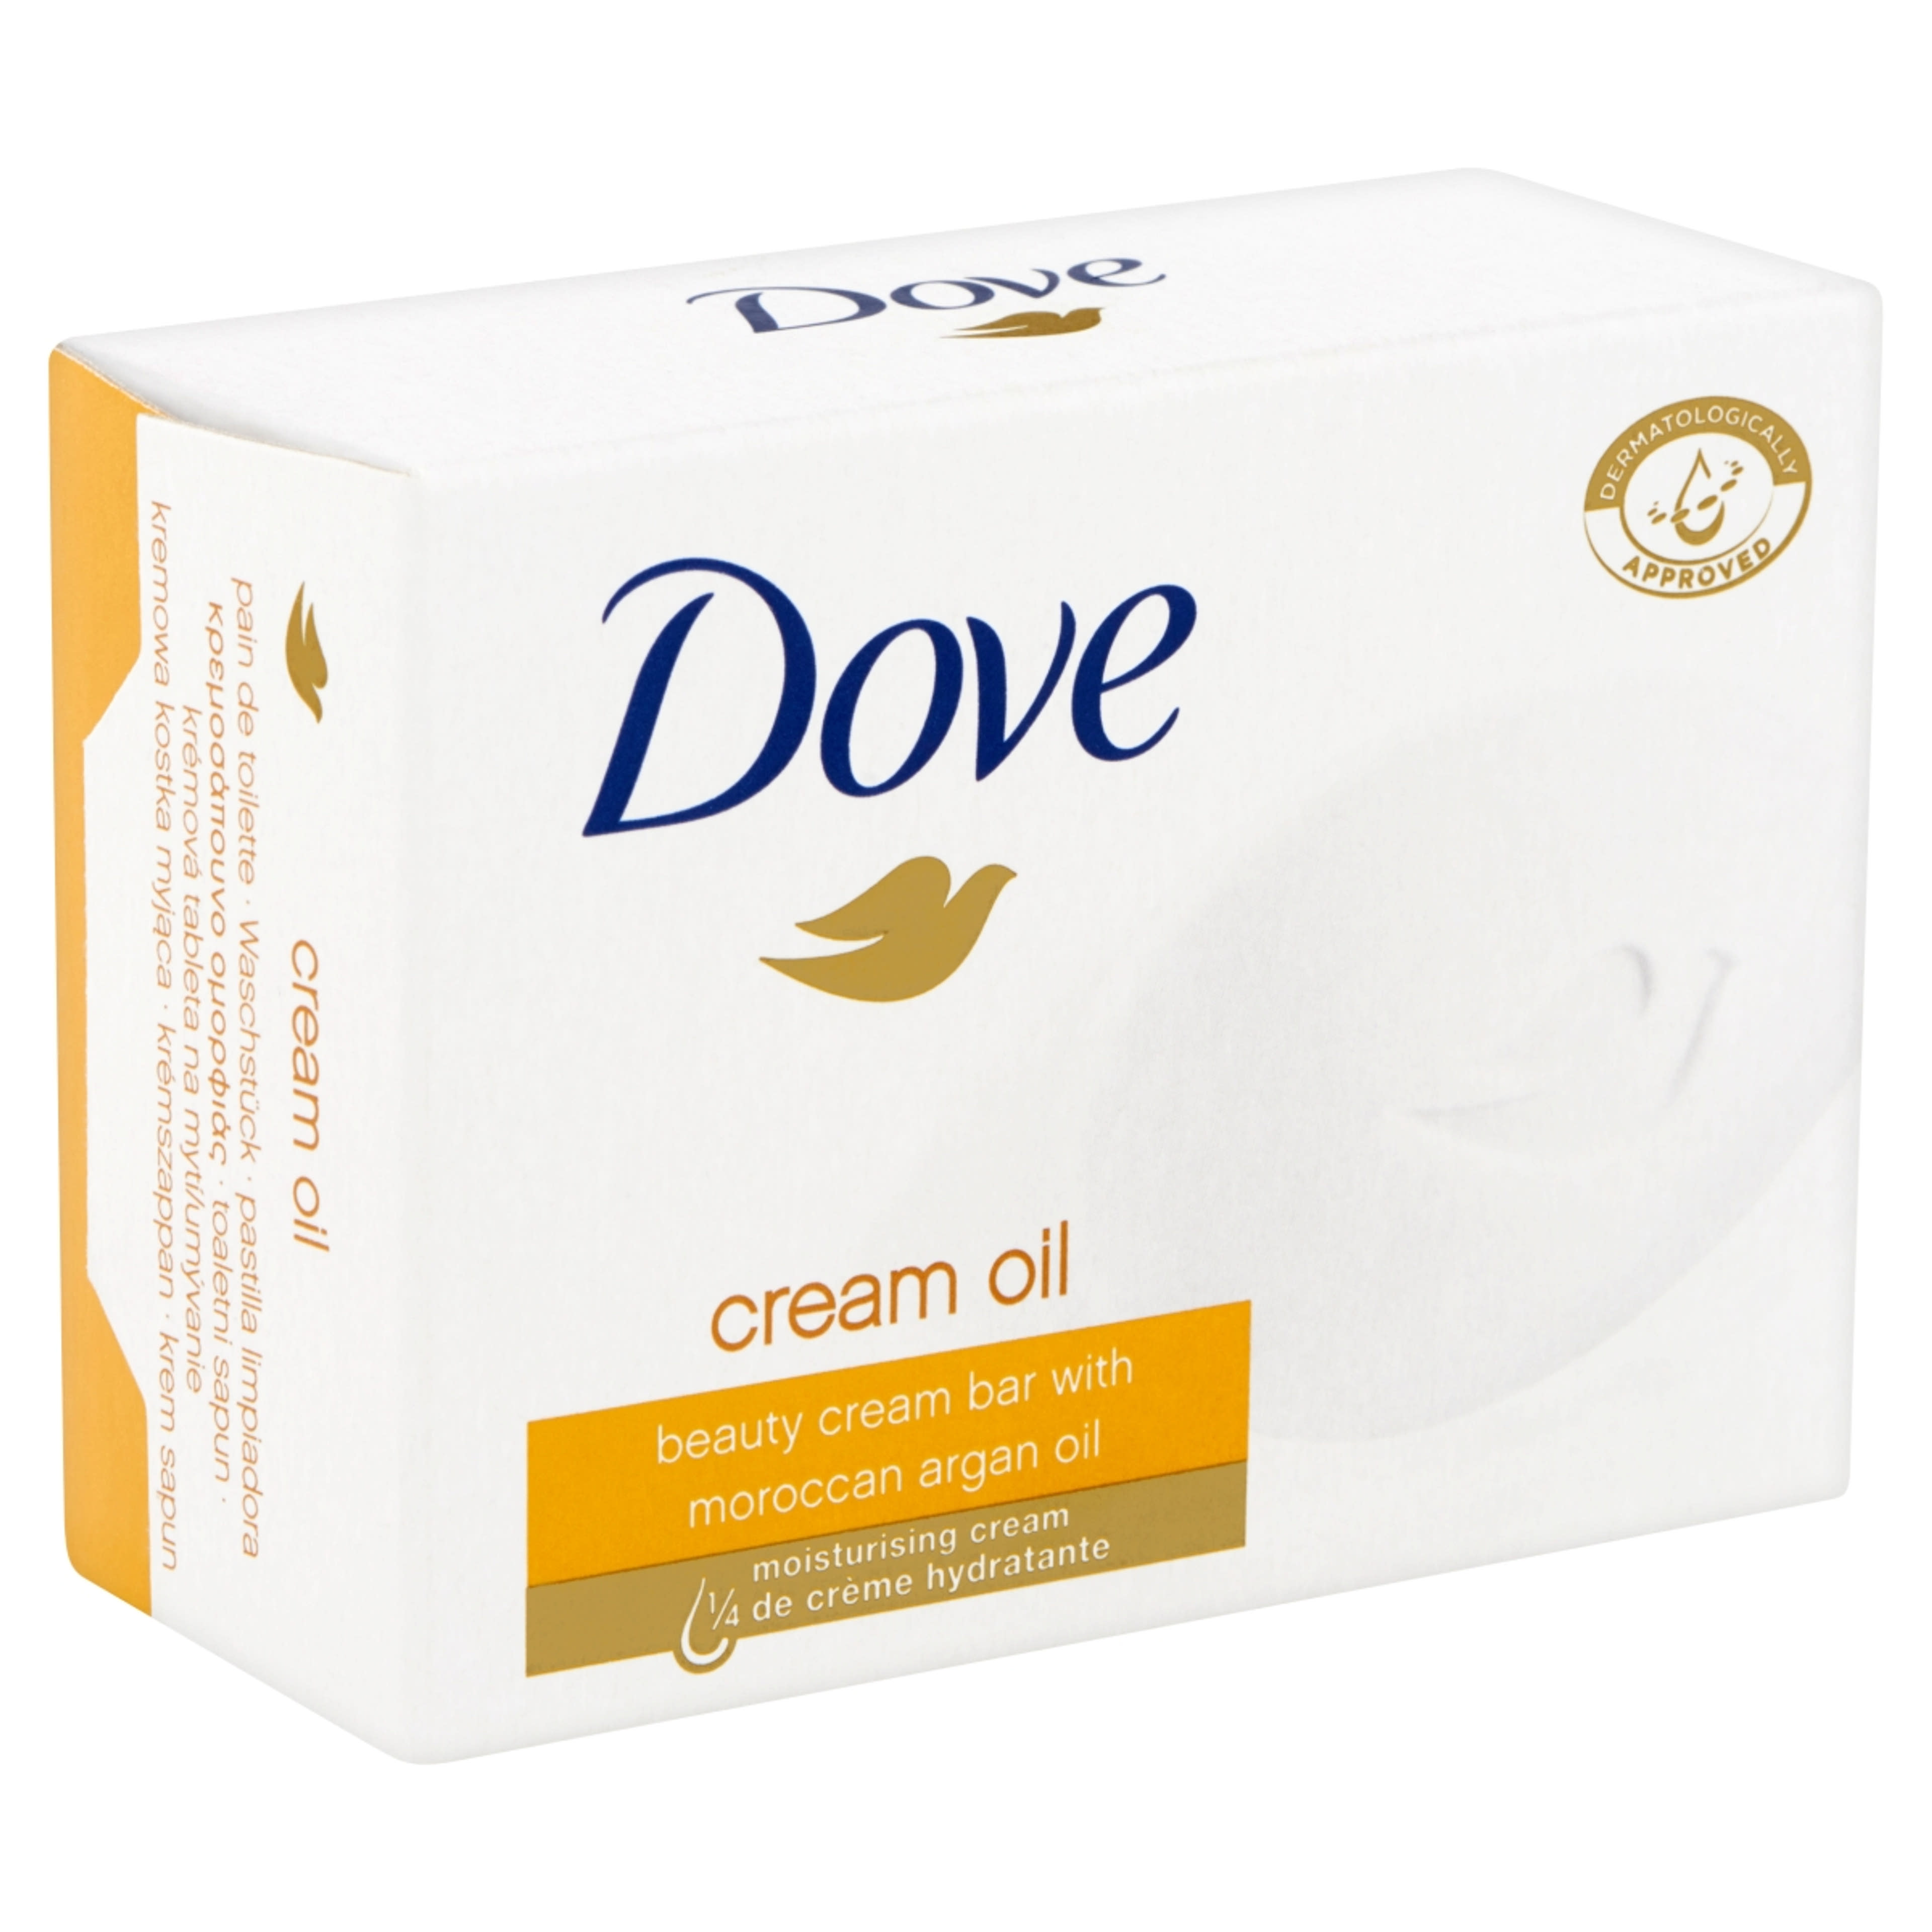 Dove Cream Oil krémszappan - 100 g-2